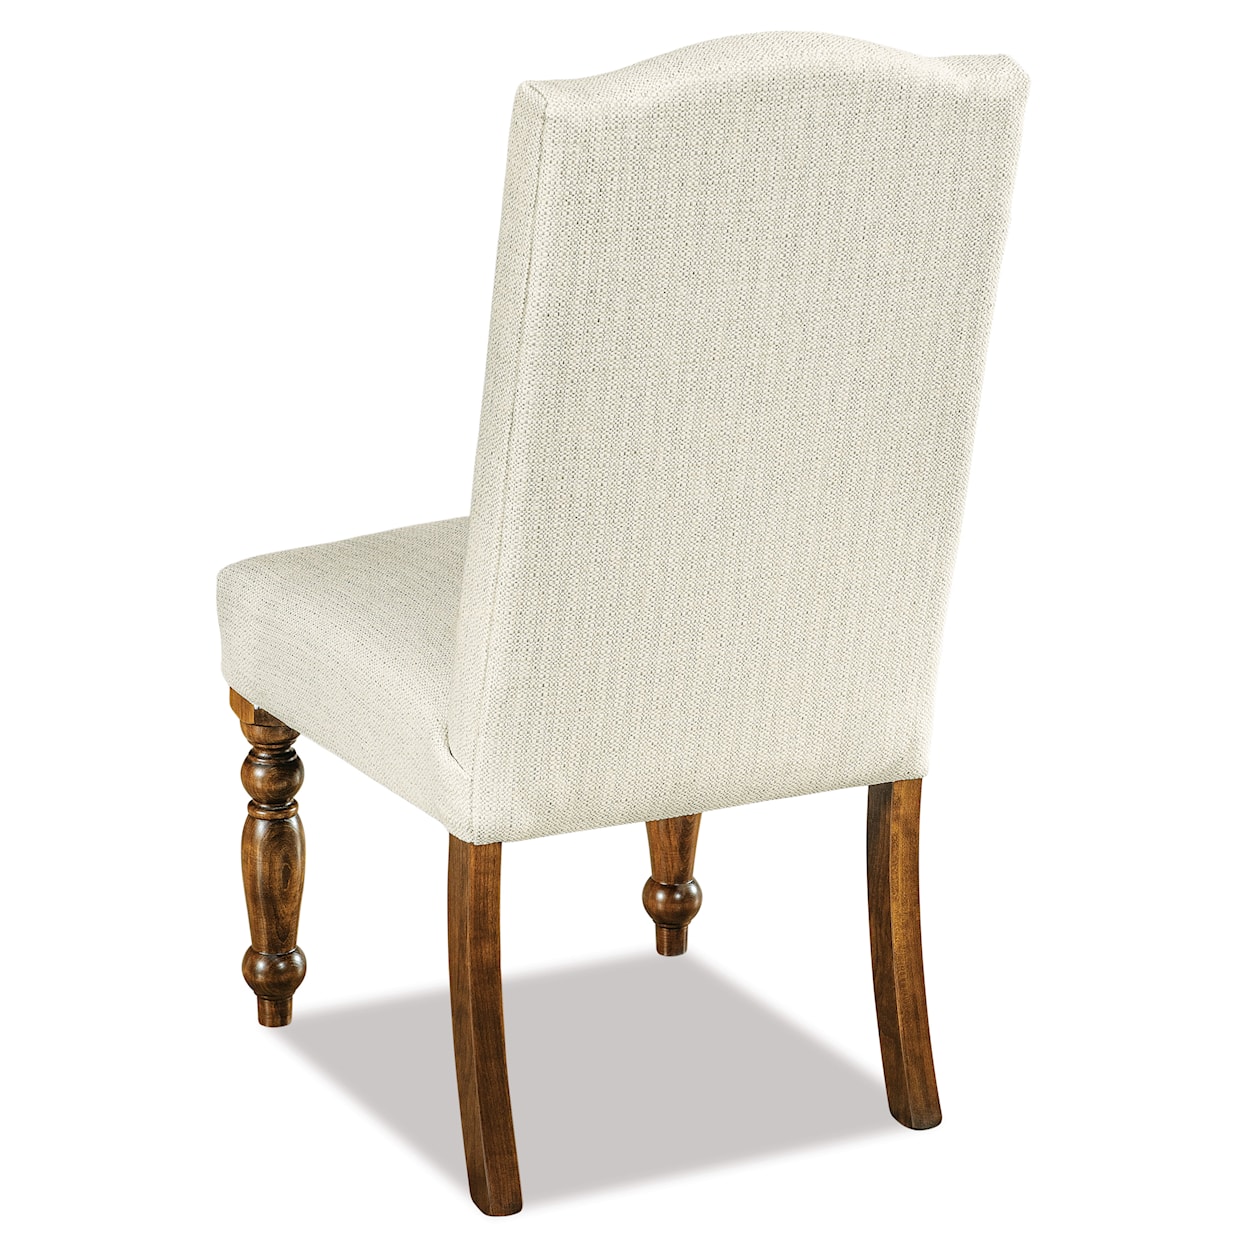 Archbold Furniture Bob Timberlake Olson Fabric Dining Side Chair